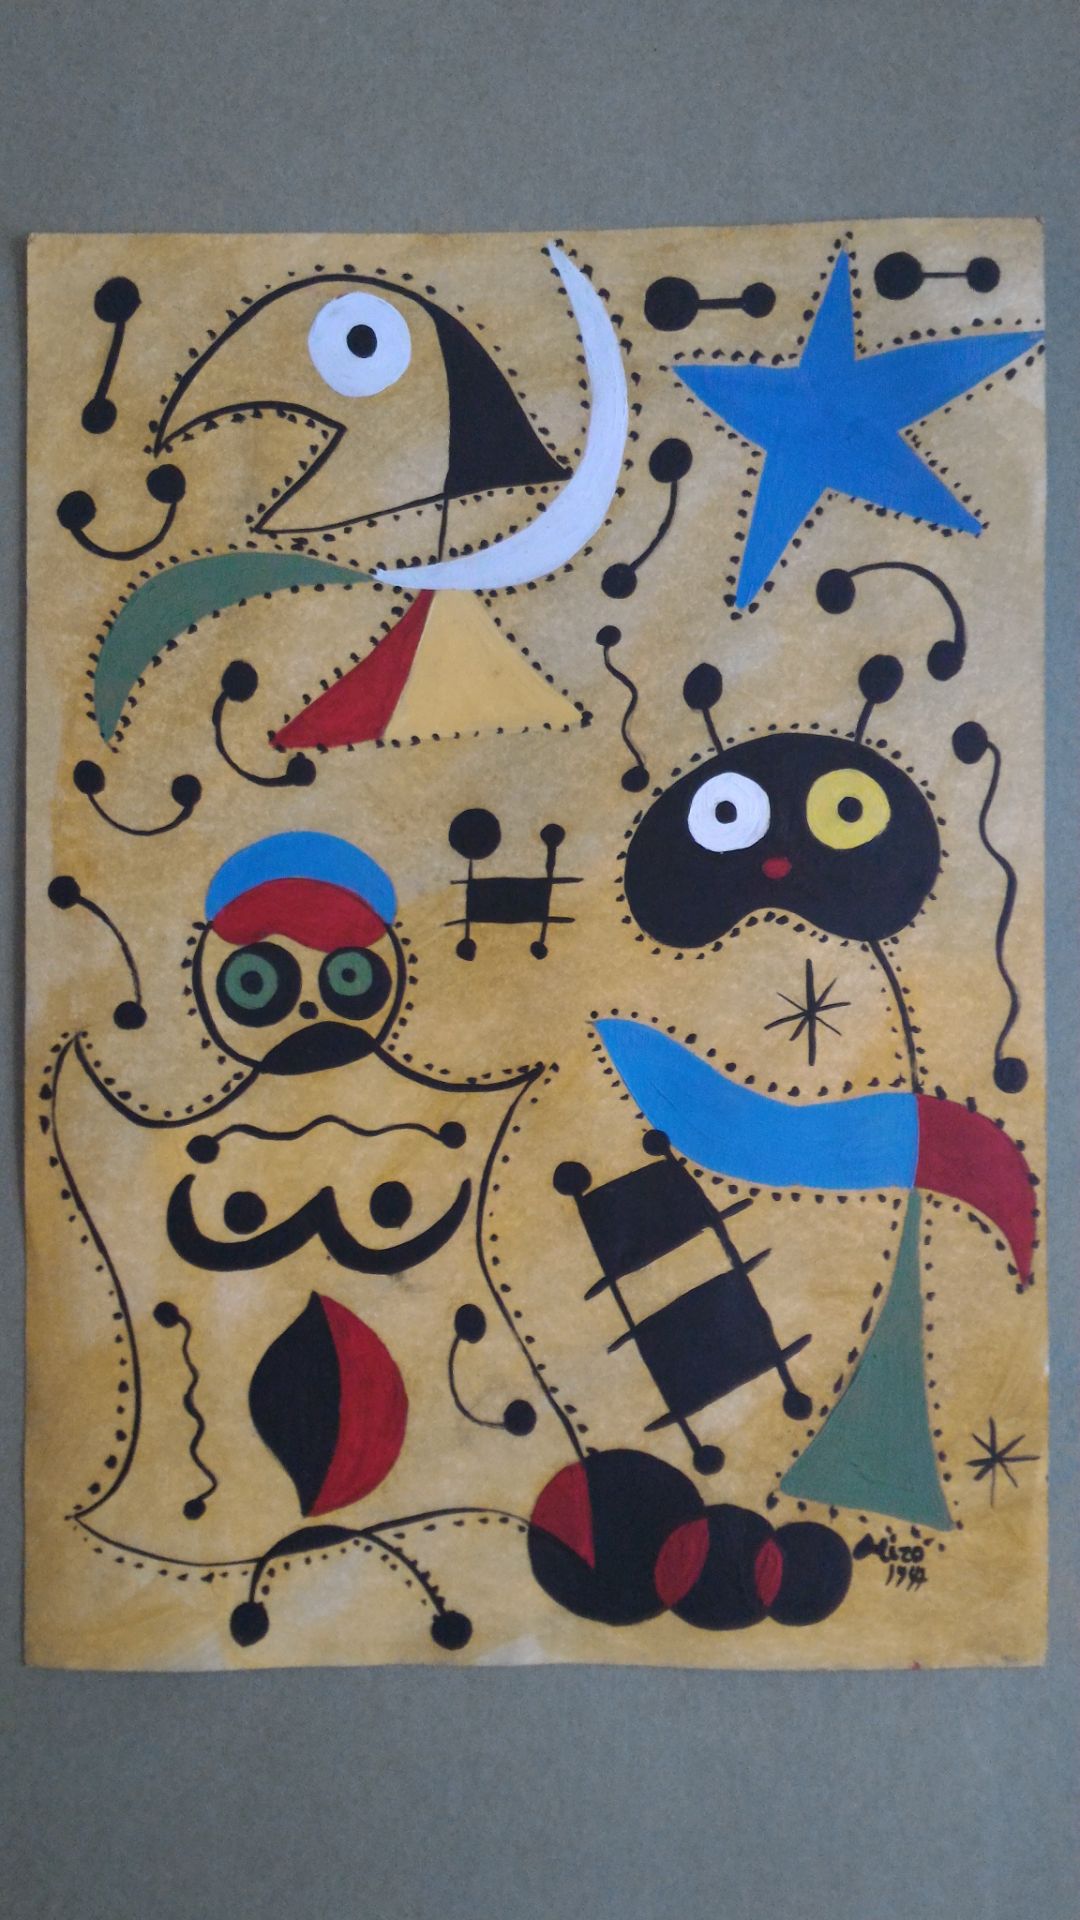 Oil on paper abstract signed Miro - dated 1947 & Titled la mujer y el hijo en la noche. - Image 2 of 5